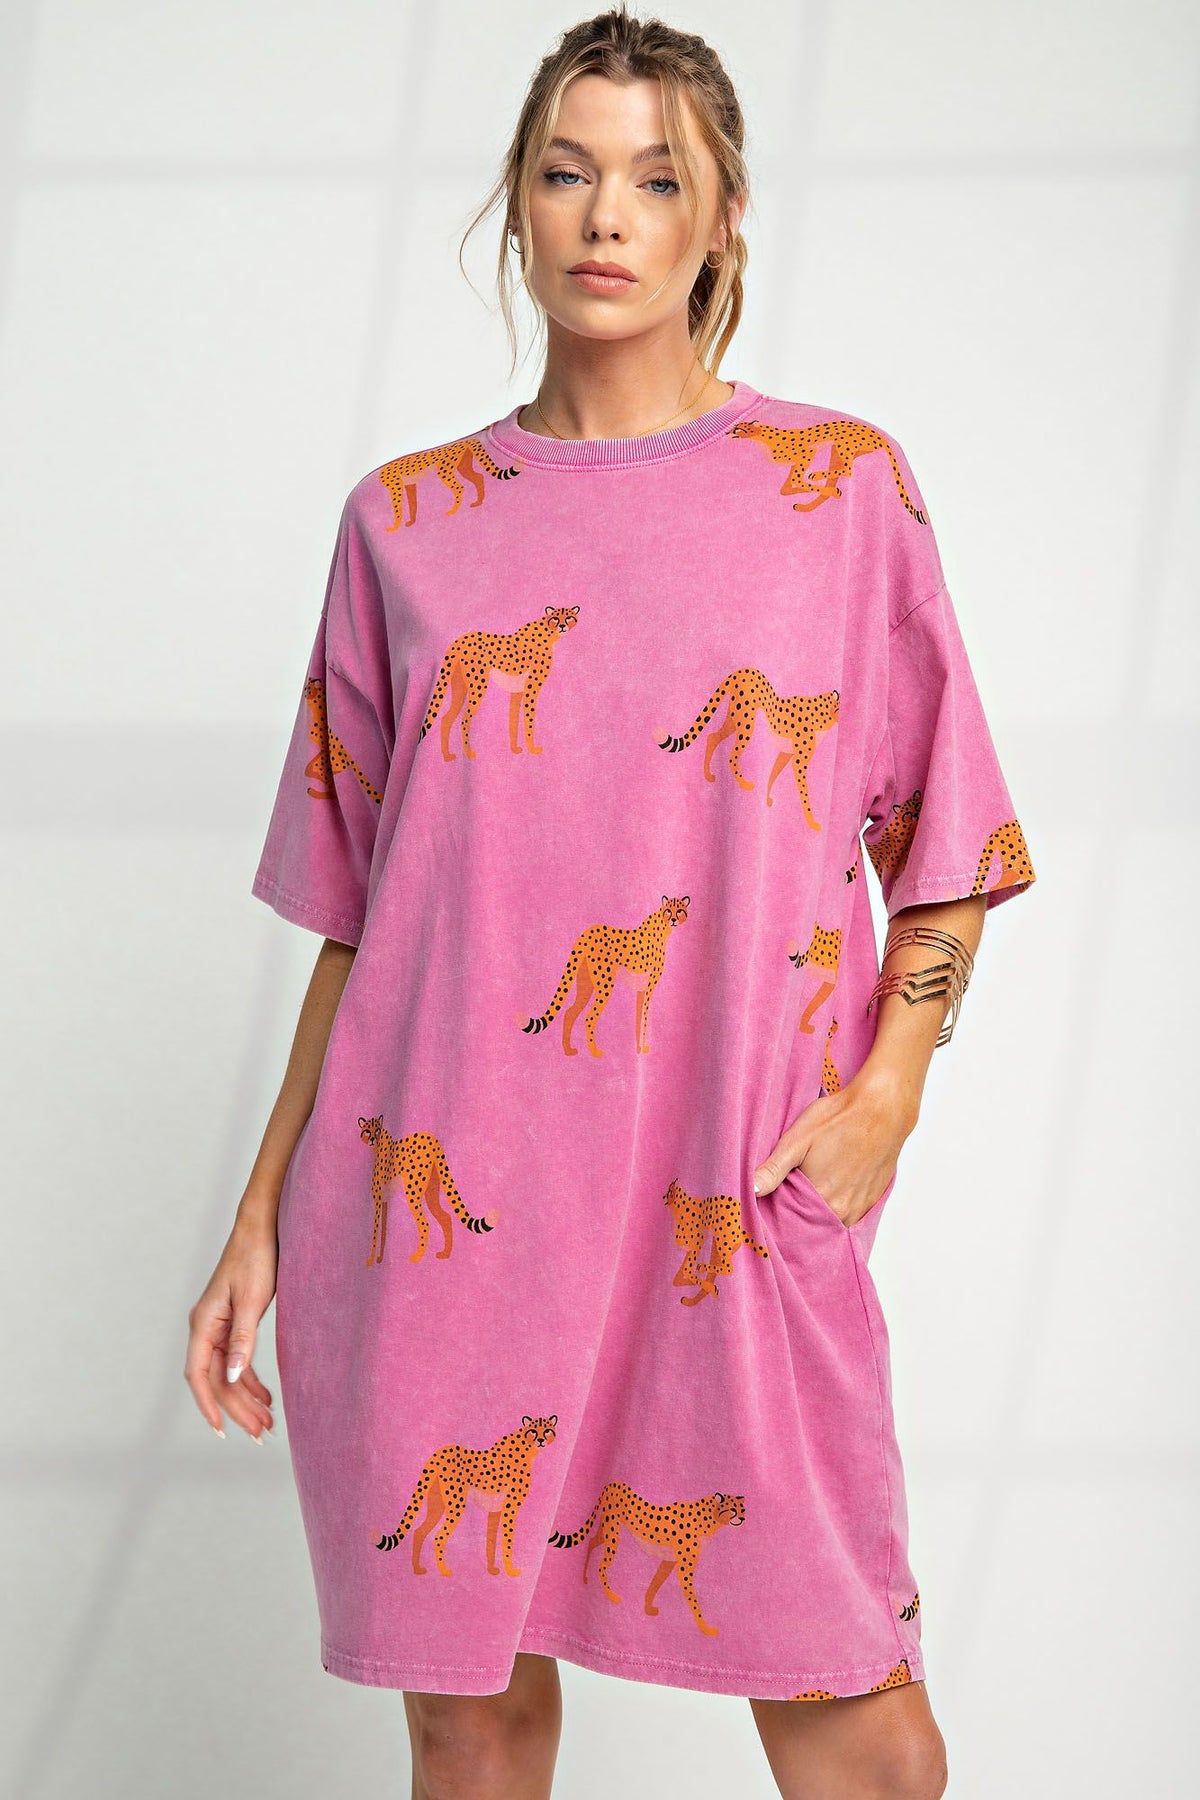 Mineral Washed Cheetah Print T-Shirt Dress - Plus